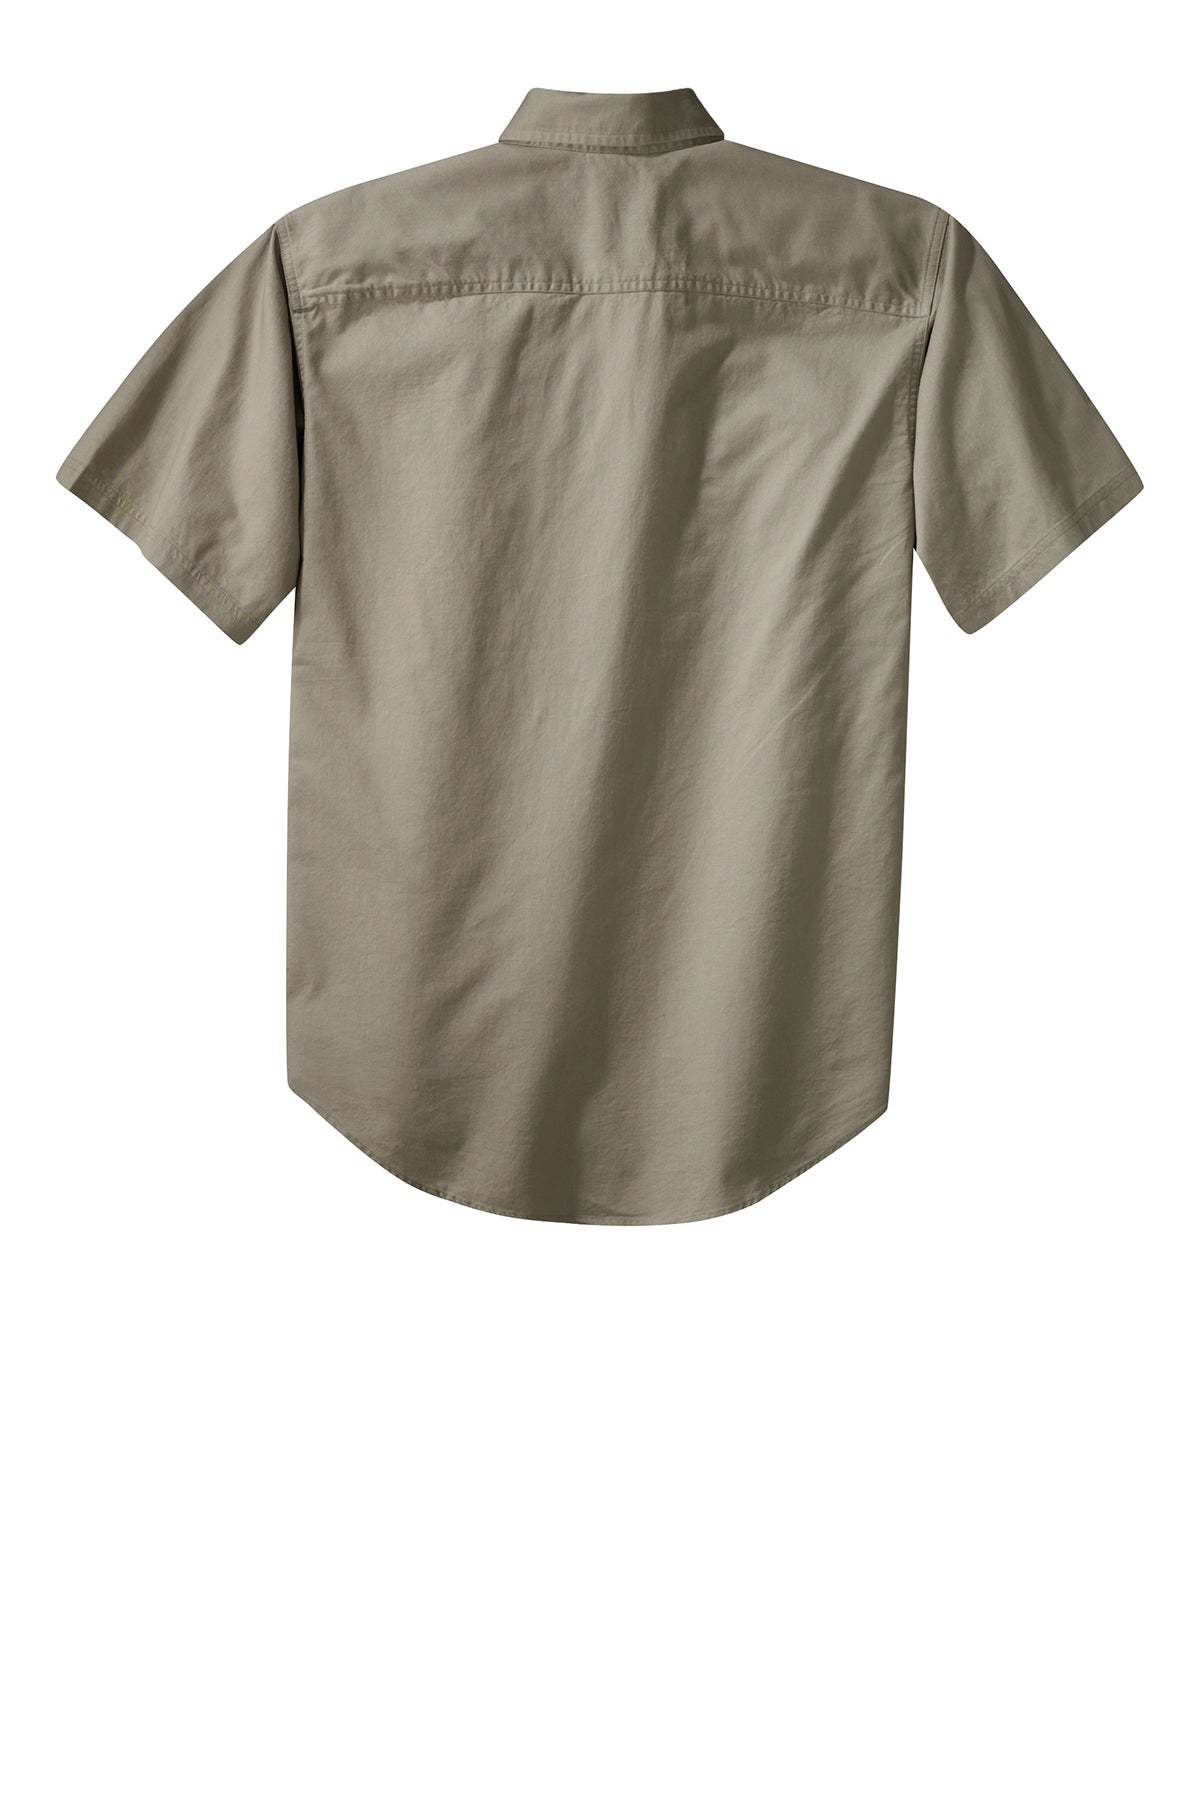 Port Authority® Short Sleeve Twill Shirt - S500T - Khaki